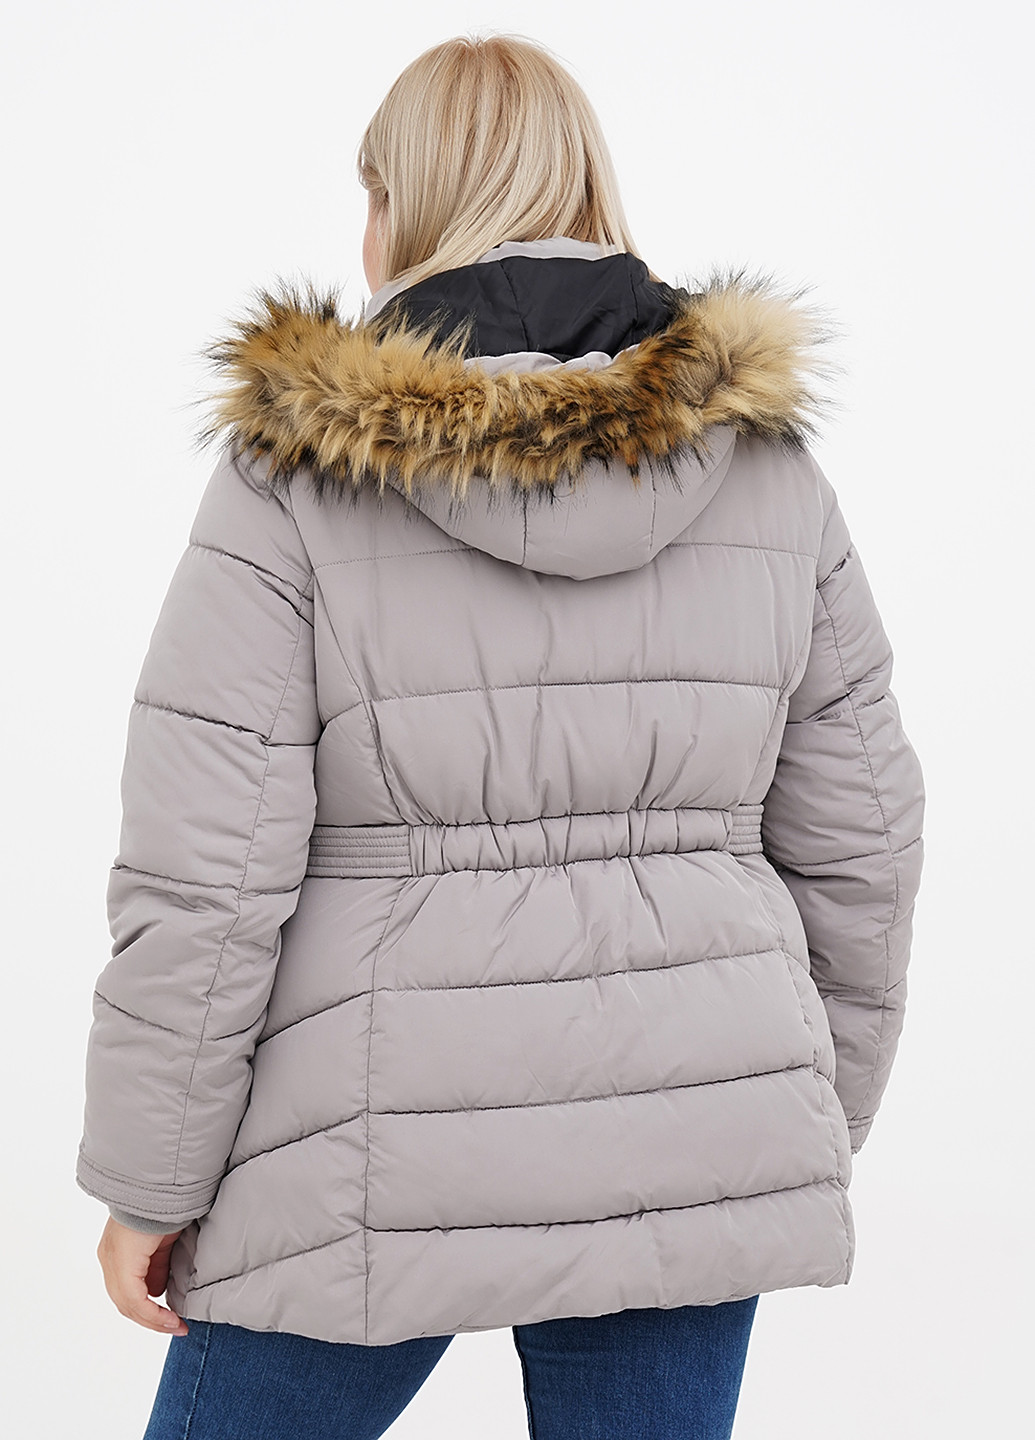 Светло-серая зимняя куртка Primark